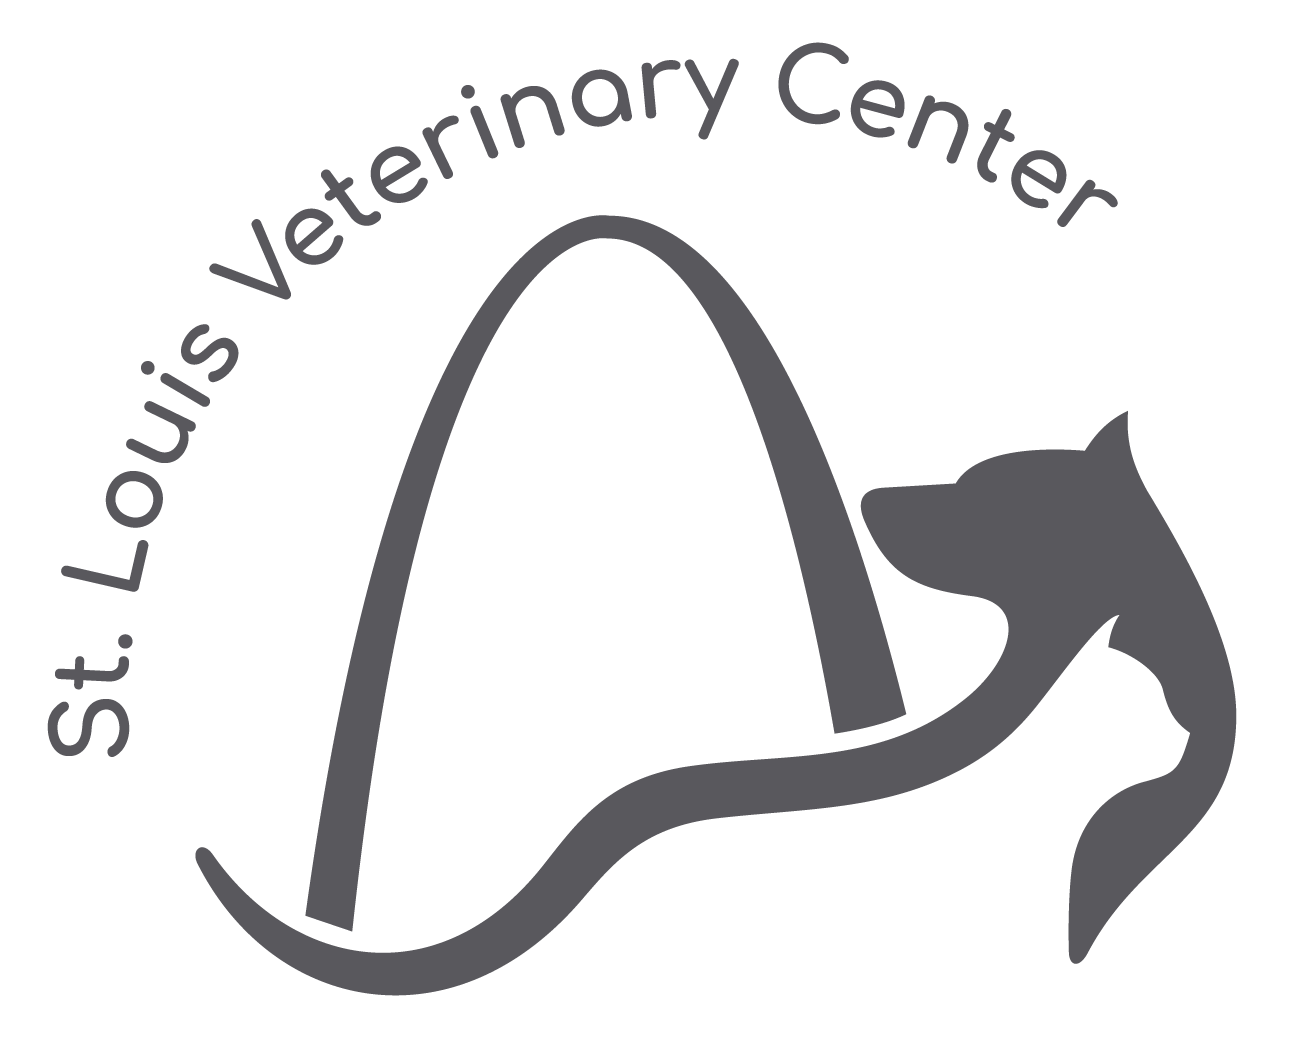 St. Louis Veterinary Center